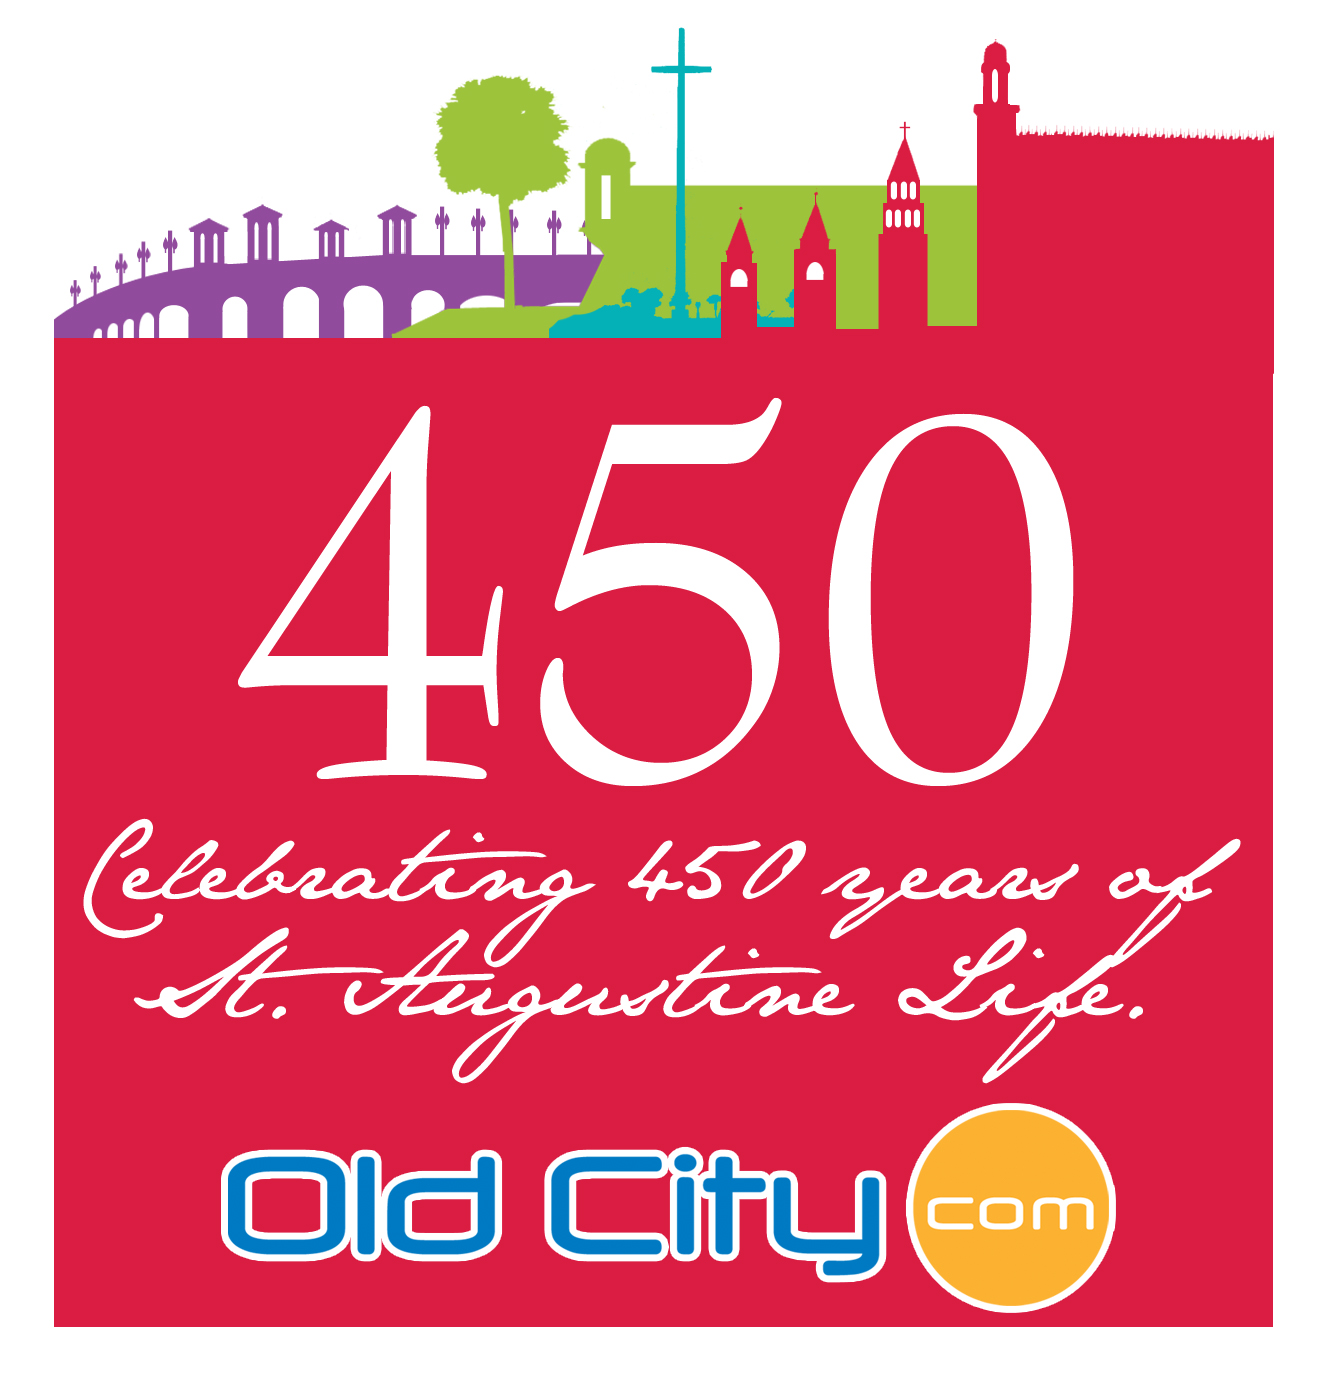 St. Augustine's 450th Birthday Celebration